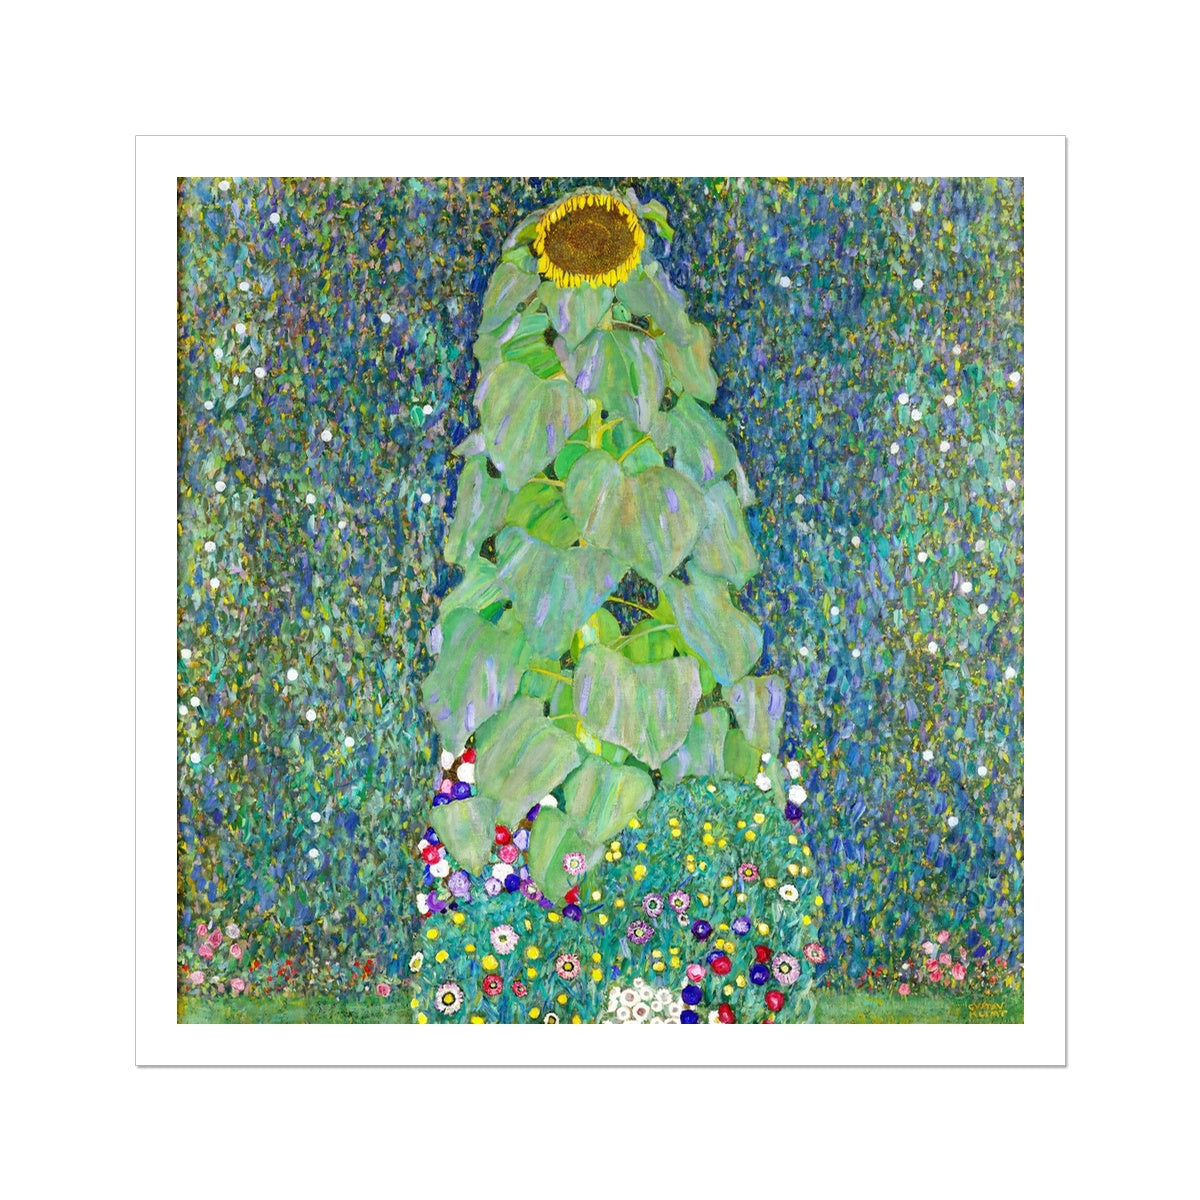 Gustav Klimt Open Edition Art Print. 'Sunflower'. Art Gallery Historic Art